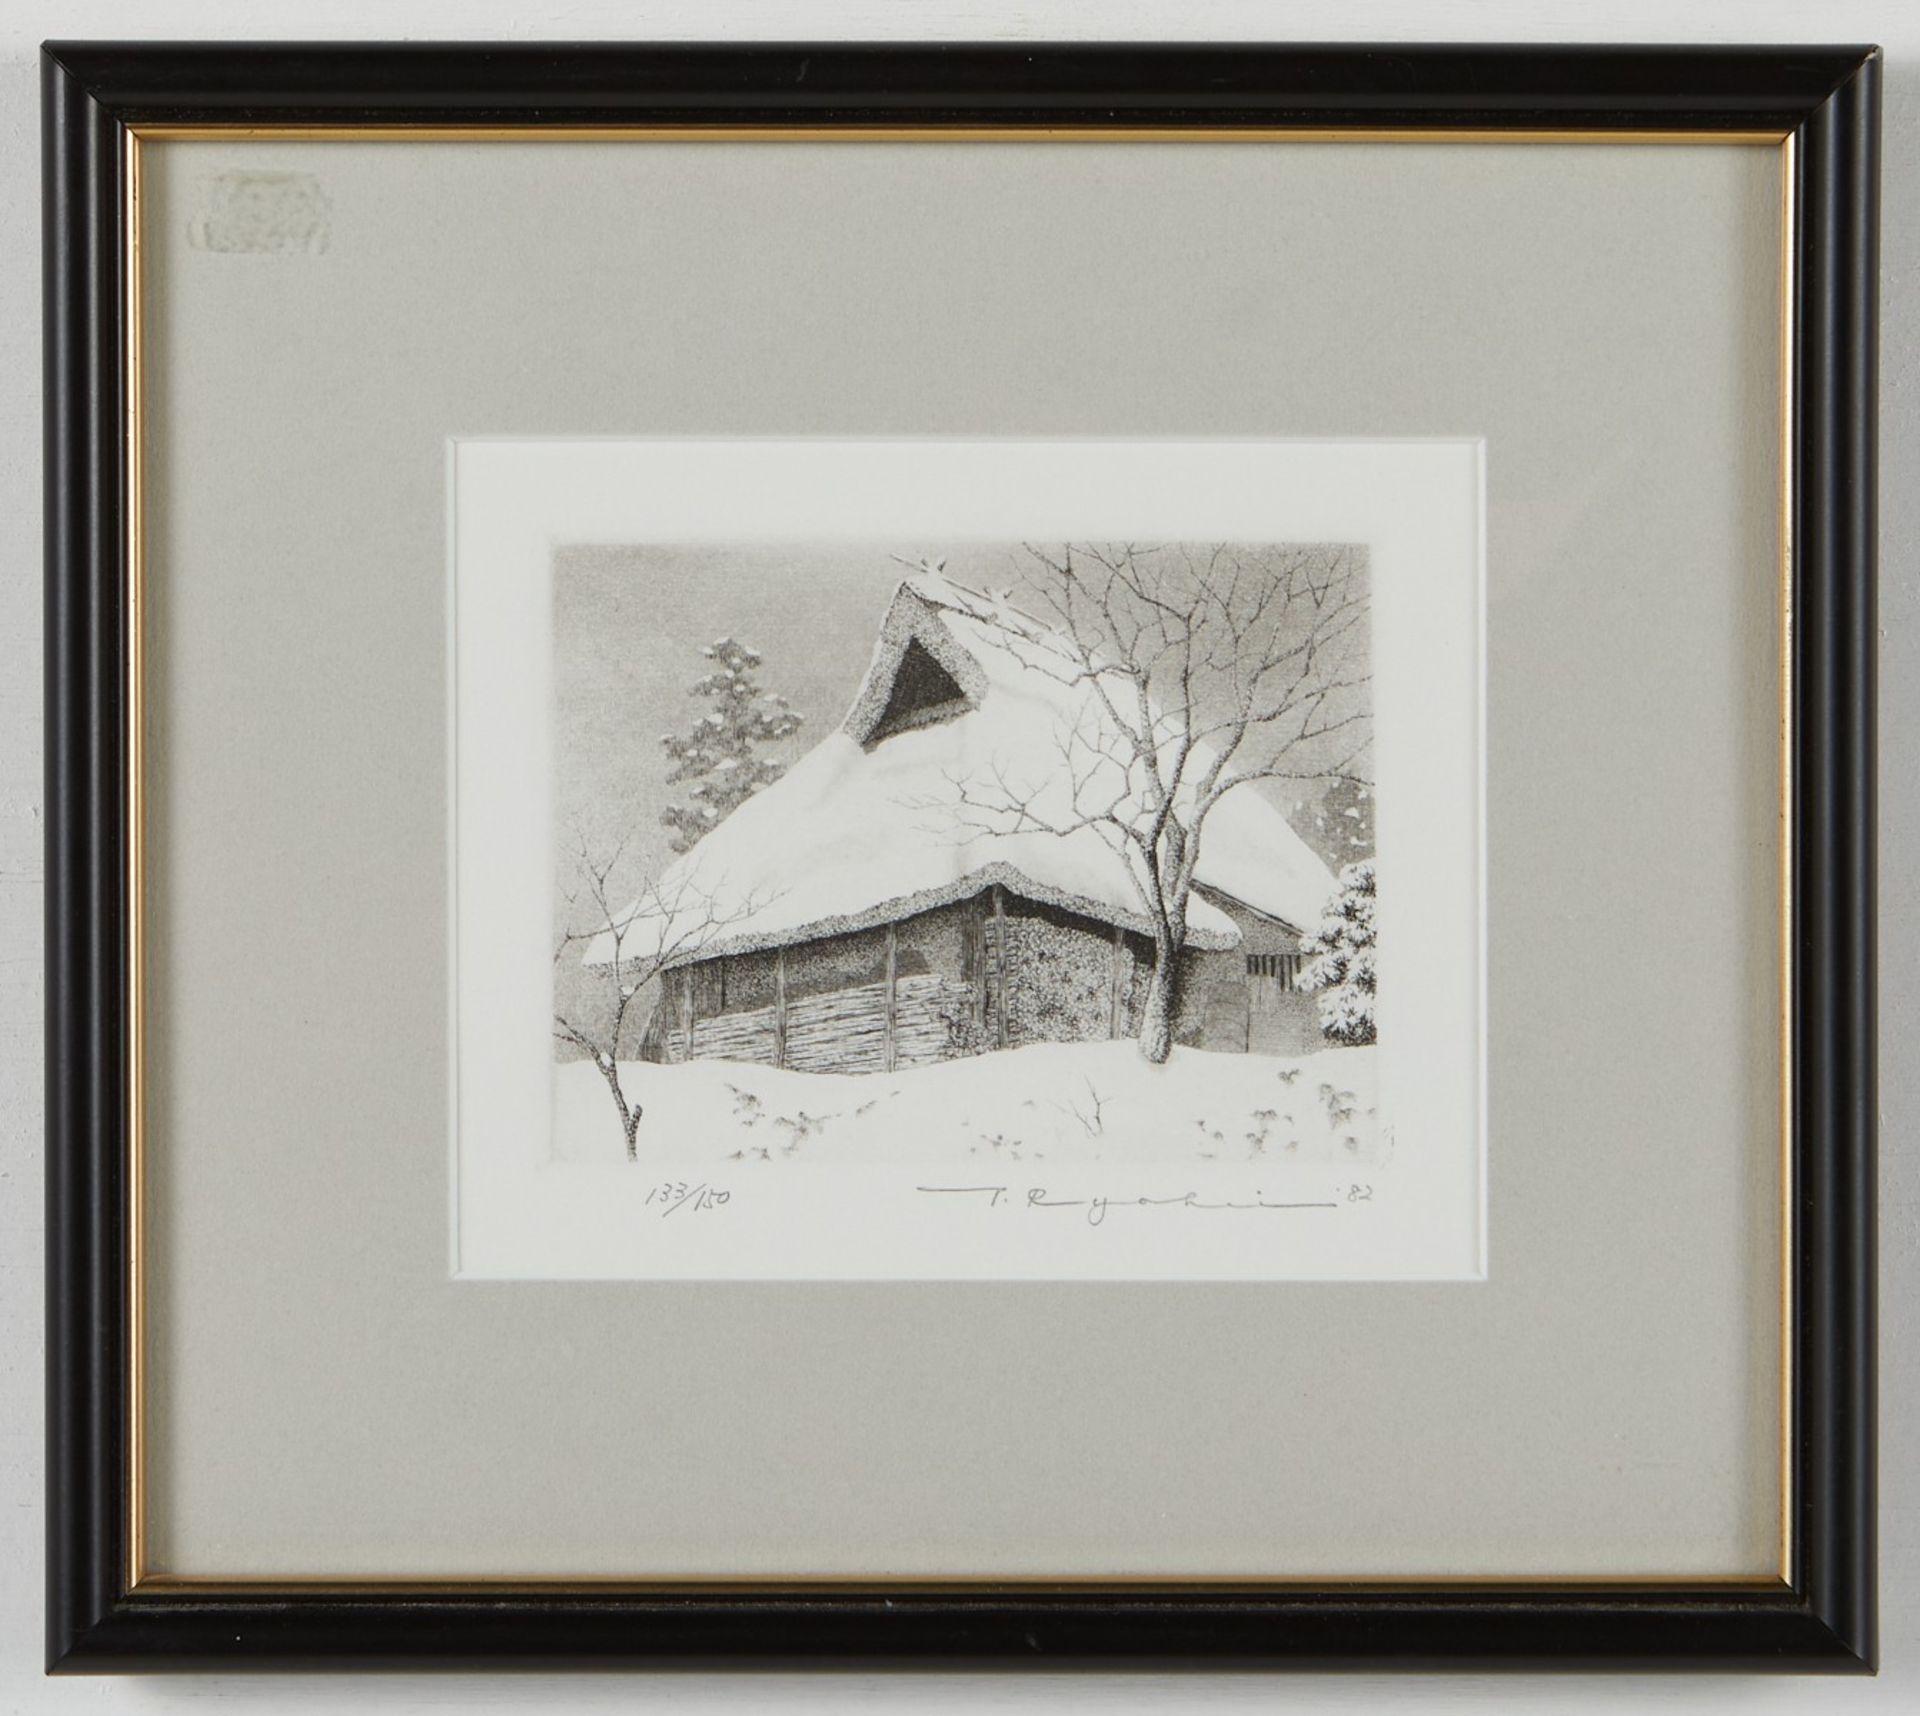 Ryohei Tanaka "Snow on Thatched Roof #2" Shin-hanga Print - Image 2 of 4